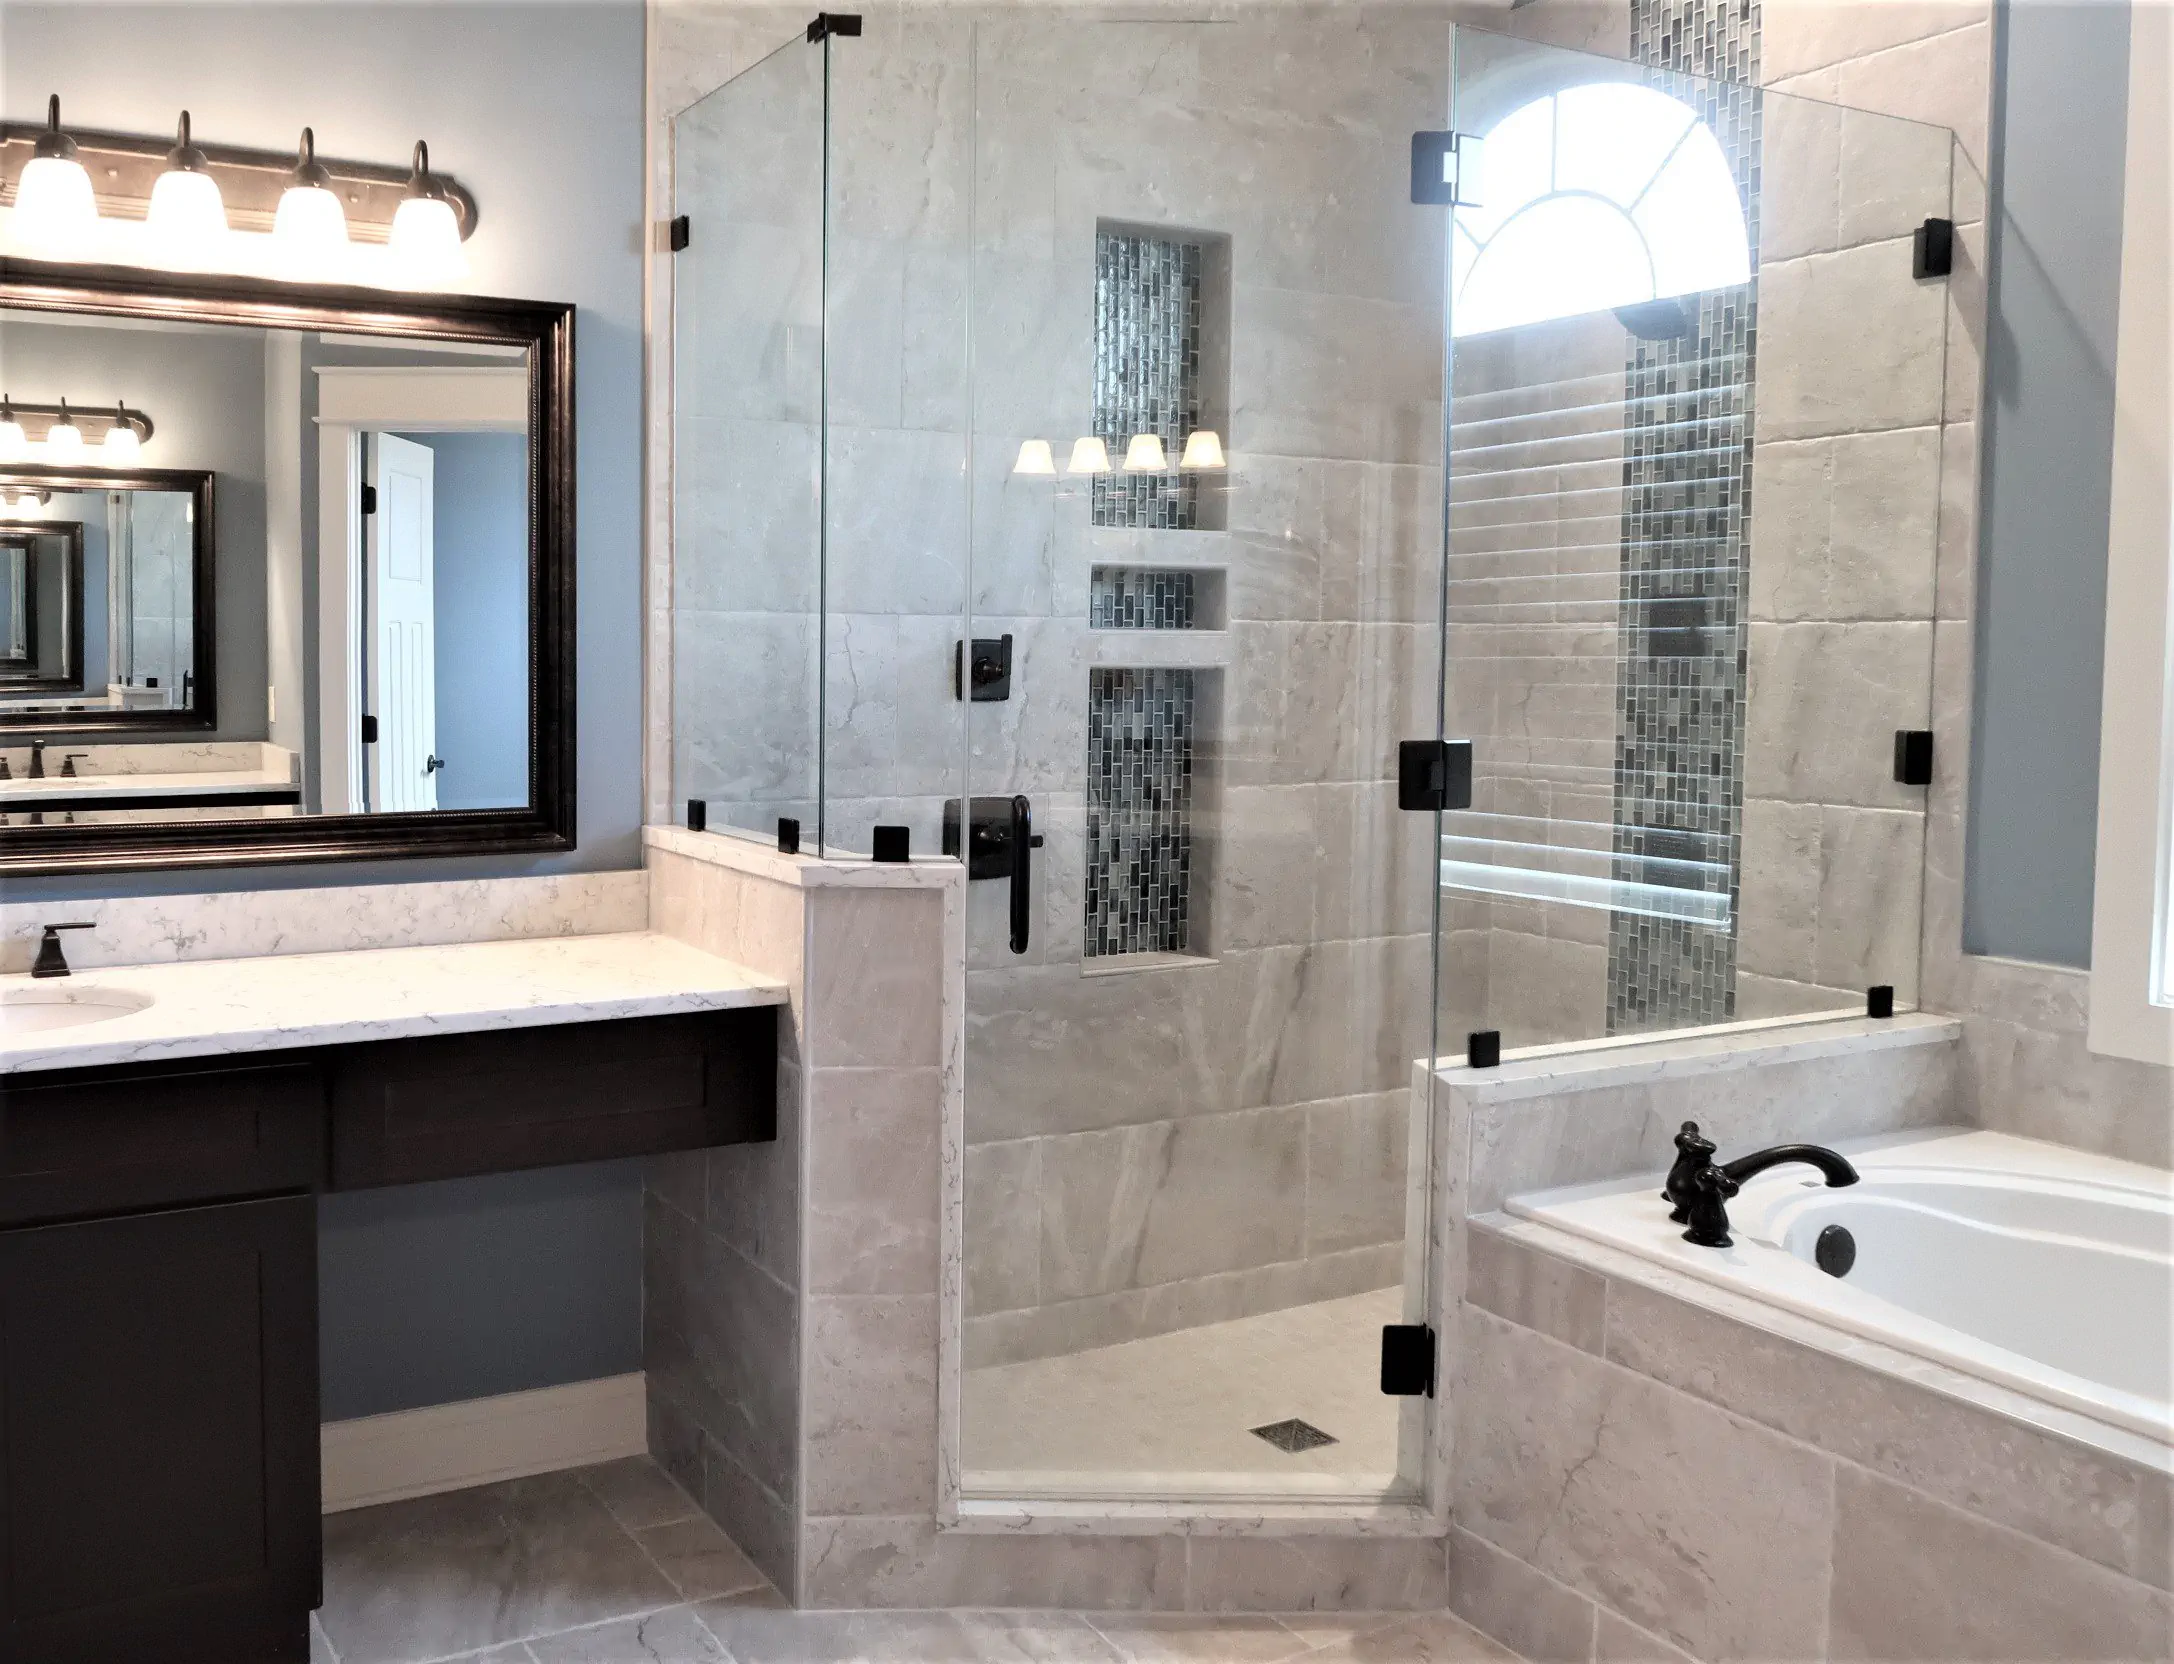 Bathroom Remodeling – DIY vs. Hiring A Pro